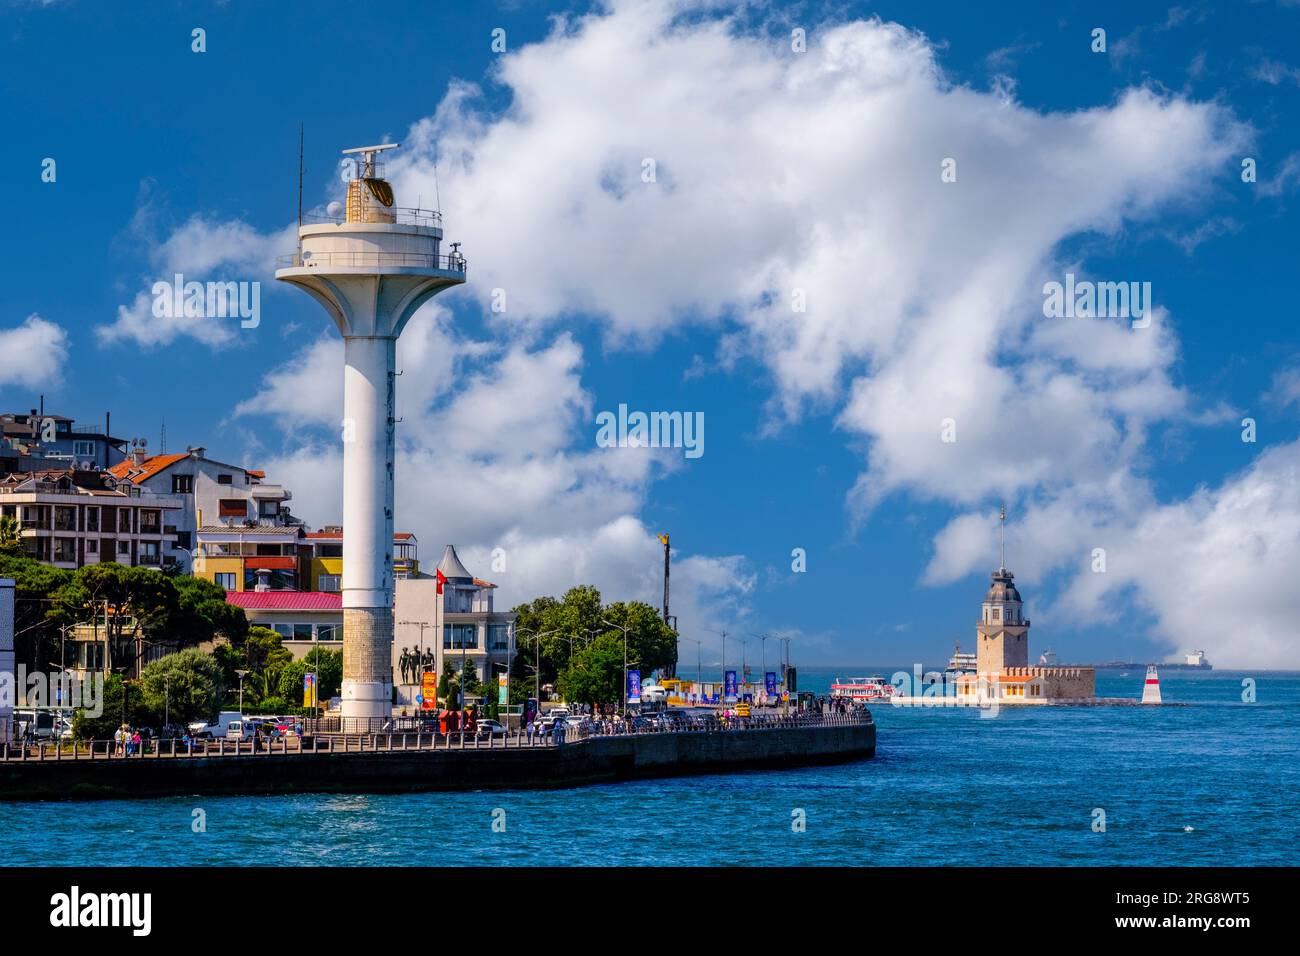 Istanbul, Turkey, Türkiye. Uskudar Control Tower to Regulate Ship Traffic Passing through the Bosphorus. Maiden's Tower (Kiz Kulesi) in background. Stock Photo